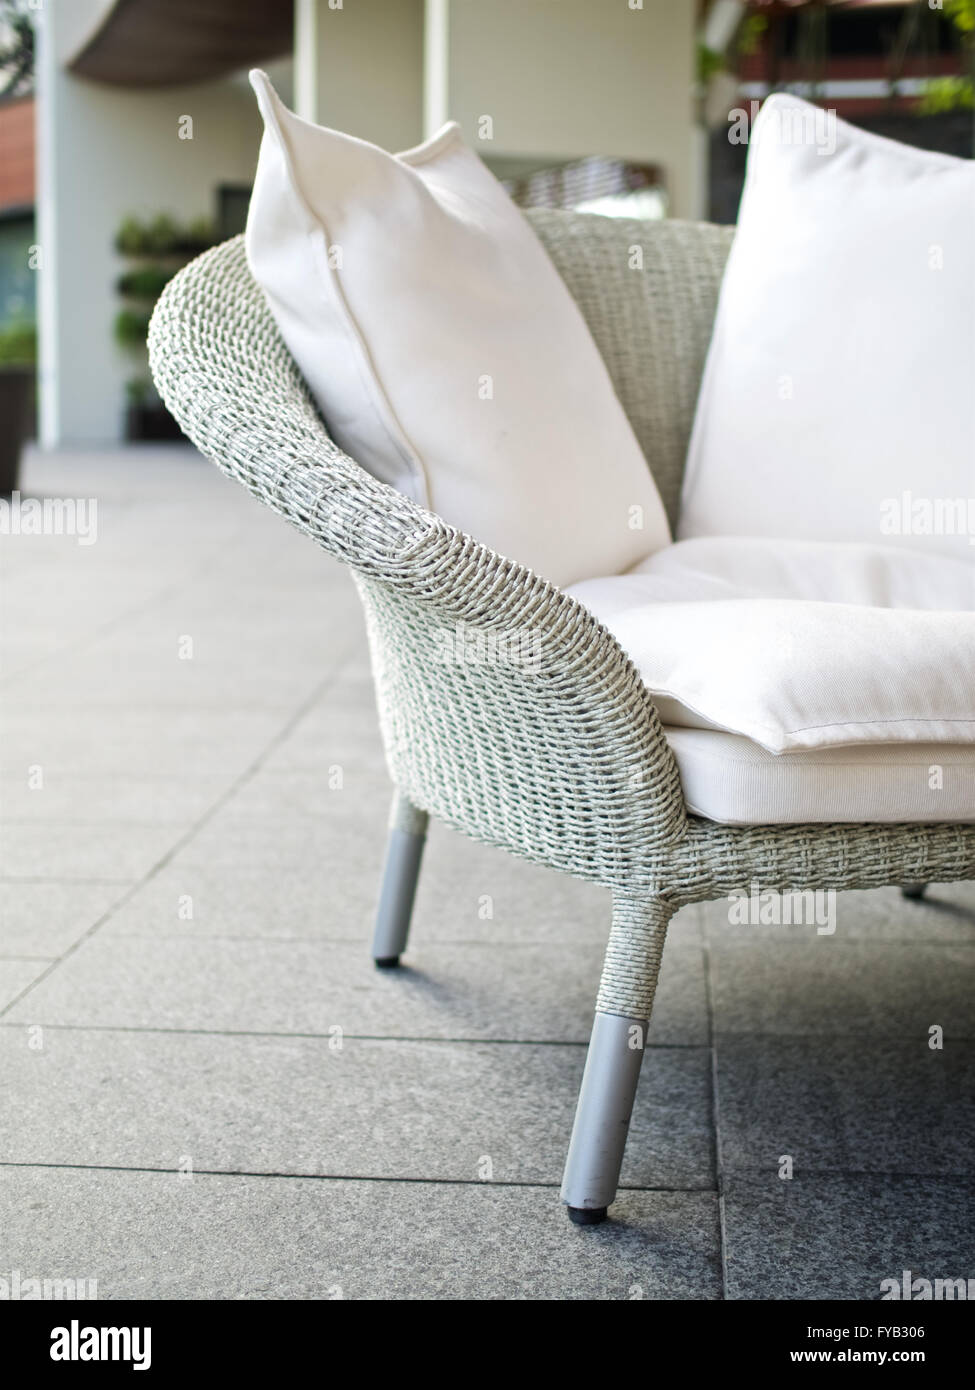 janus et cie outdoor furniture sofa chair Stock Photo